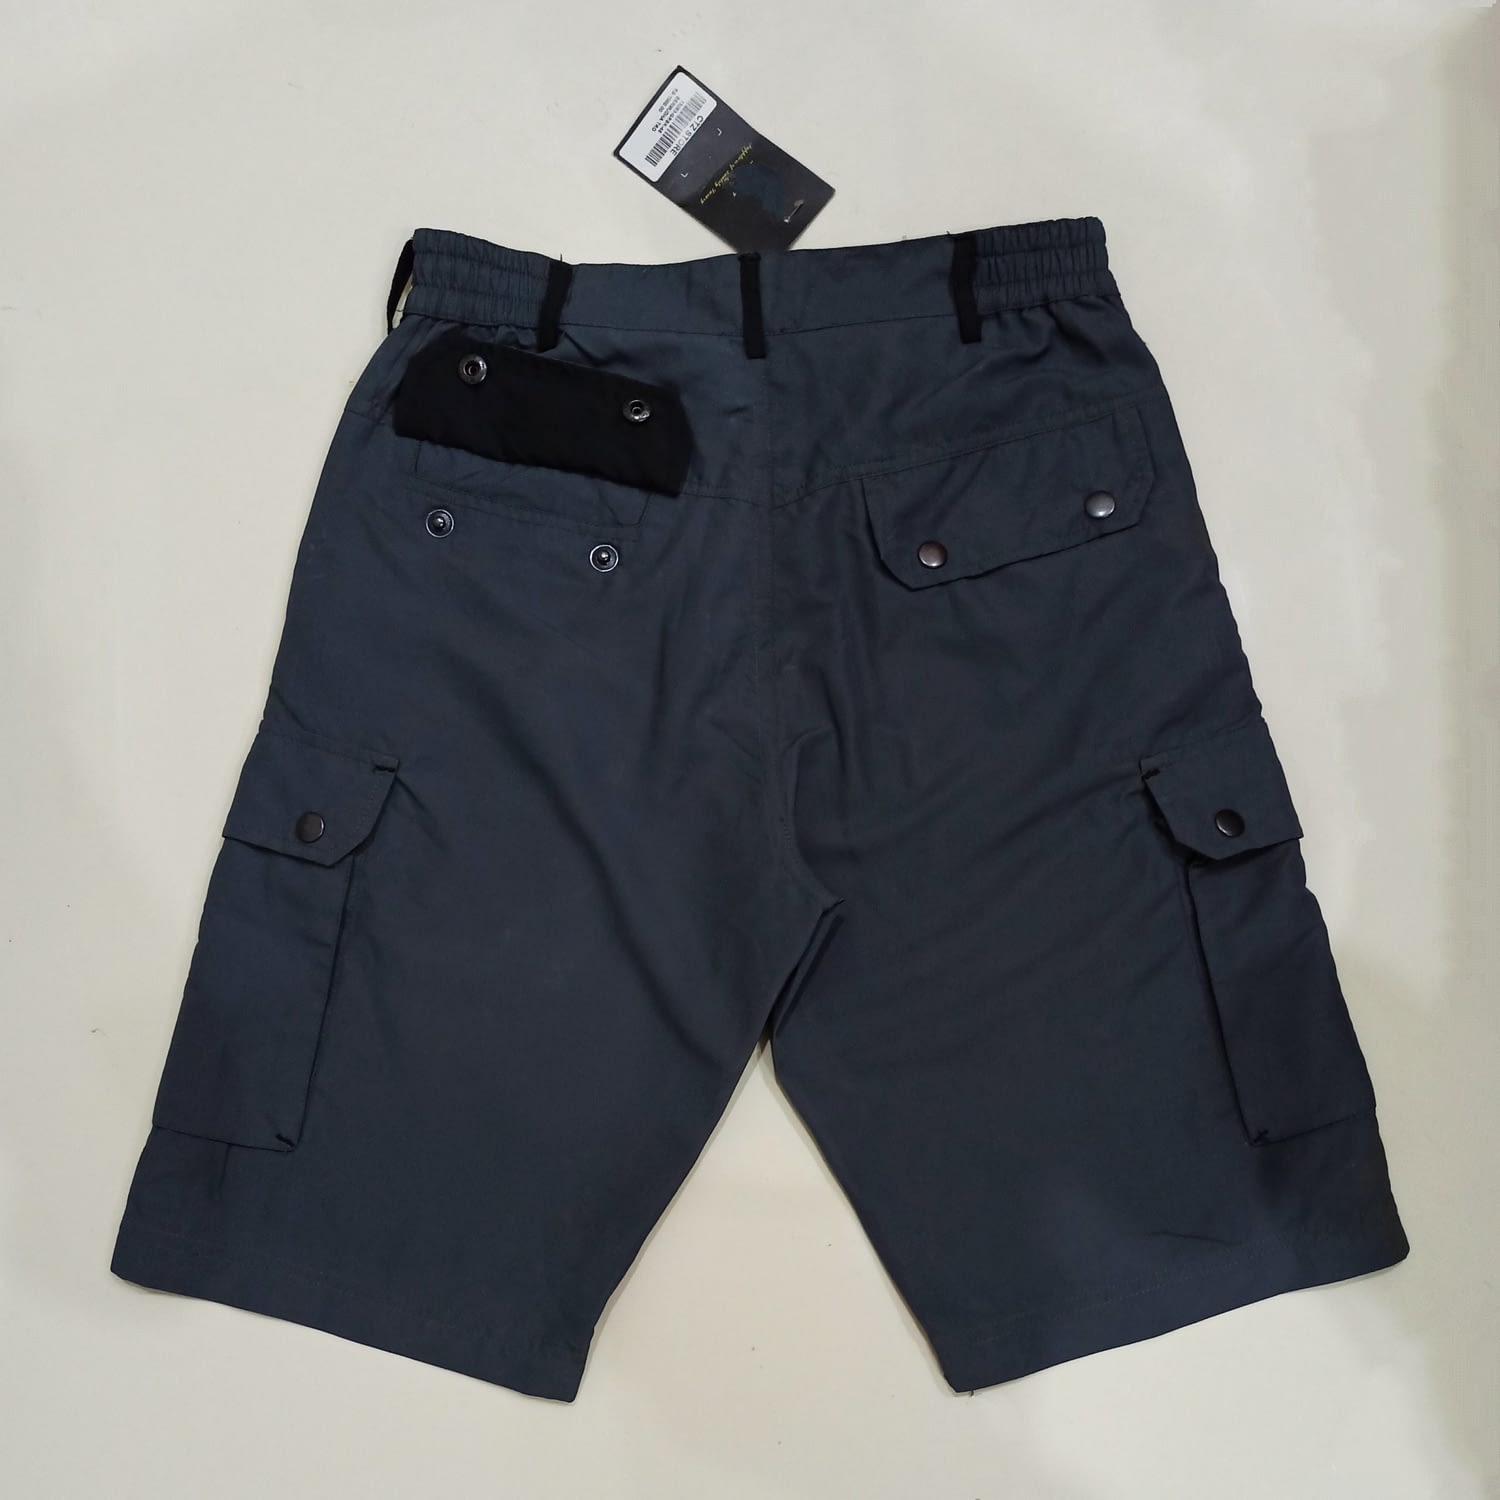 K Club - Branded Men’s Cargo Shorts GRAY BLACK